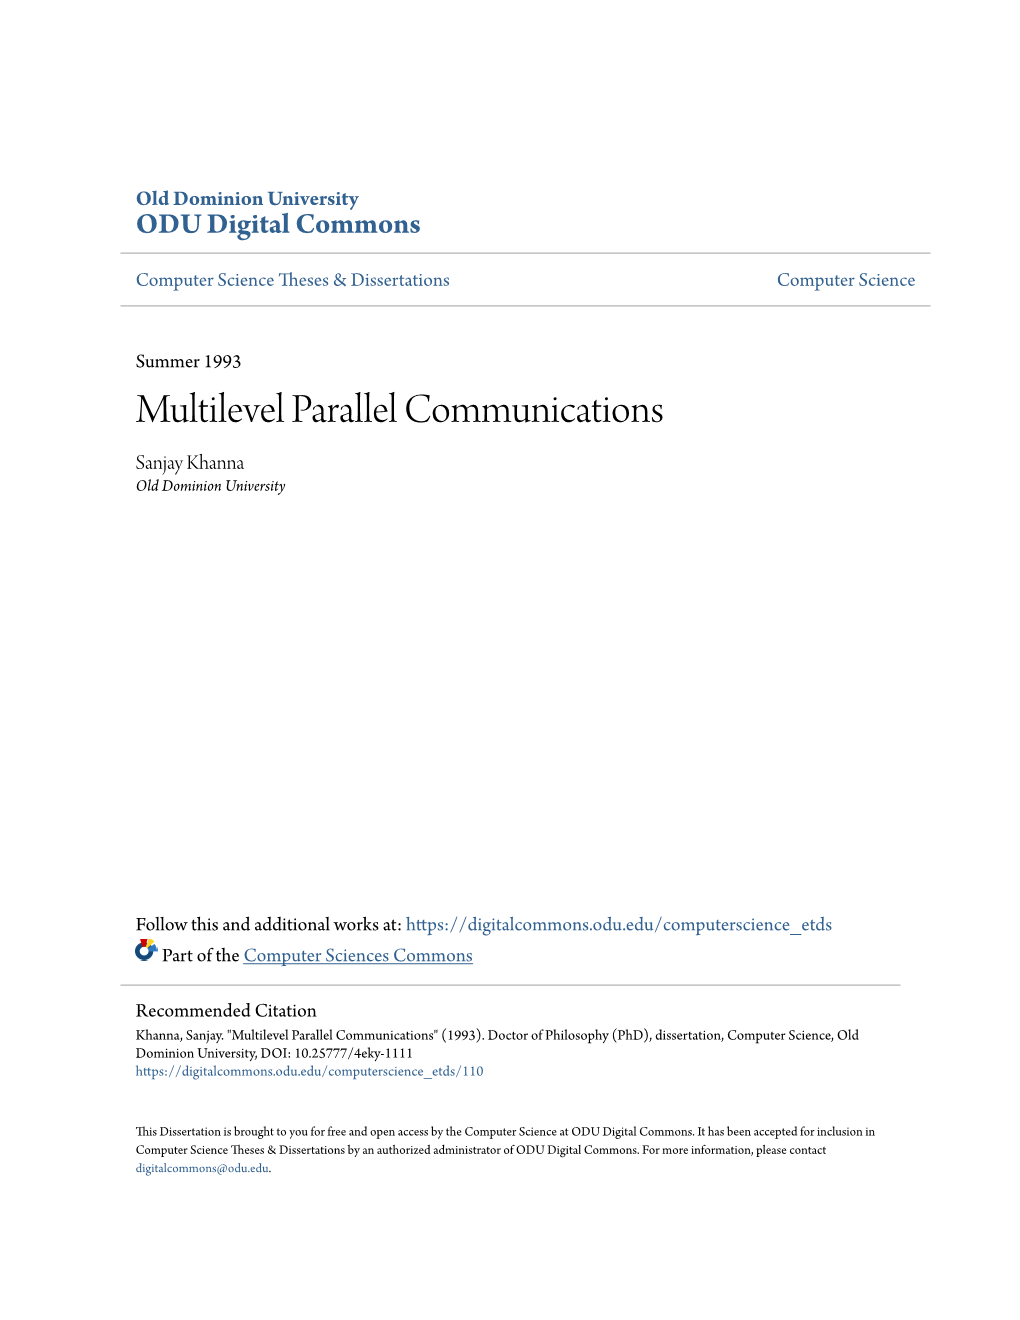 Multilevel Parallel Communications Sanjay Khanna Old Dominion University